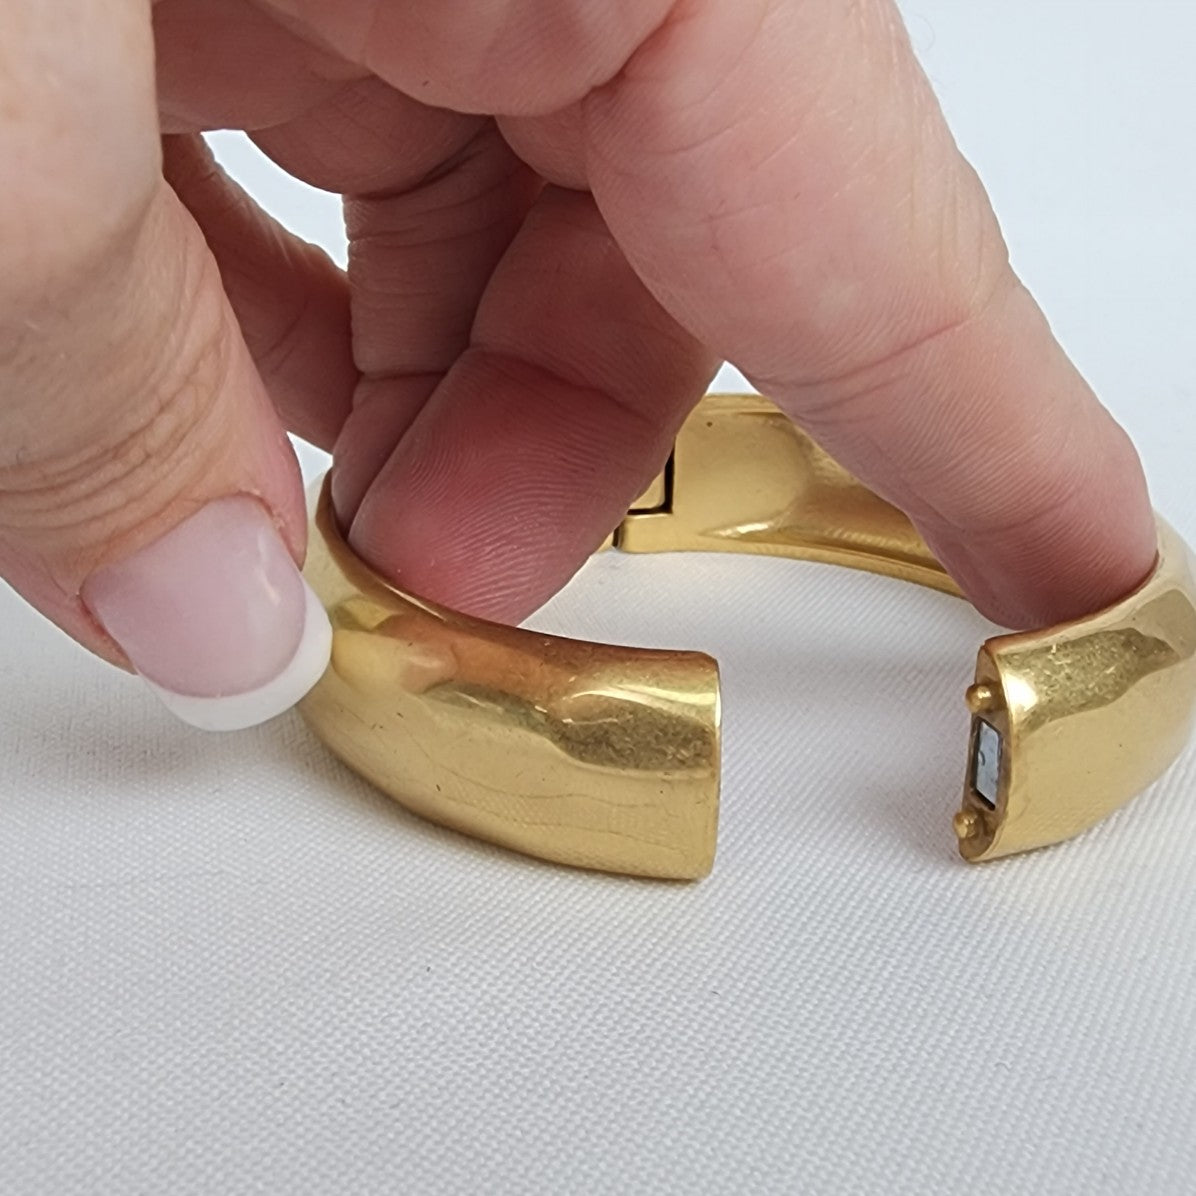 Stella & Dot Essential Sculptural Gold Cuff Hinge Bracelet